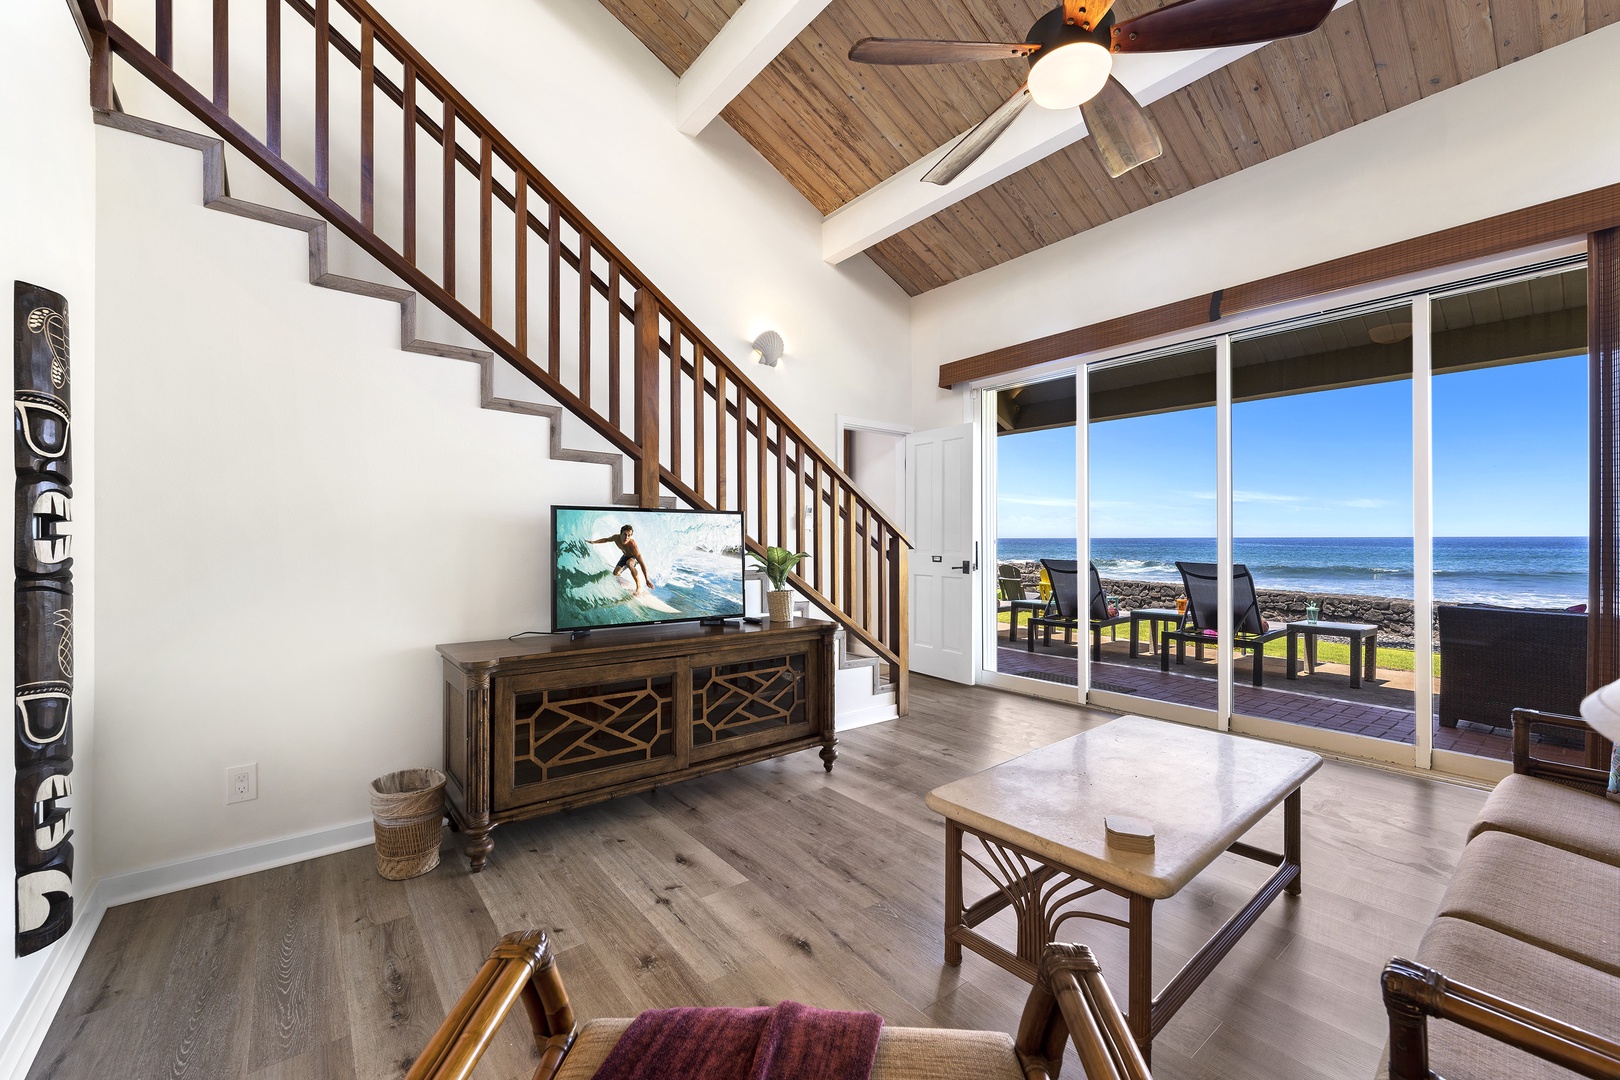 Kailua Kona Vacation Rentals, Hale Pua - Ohana Suite features incredible views as well